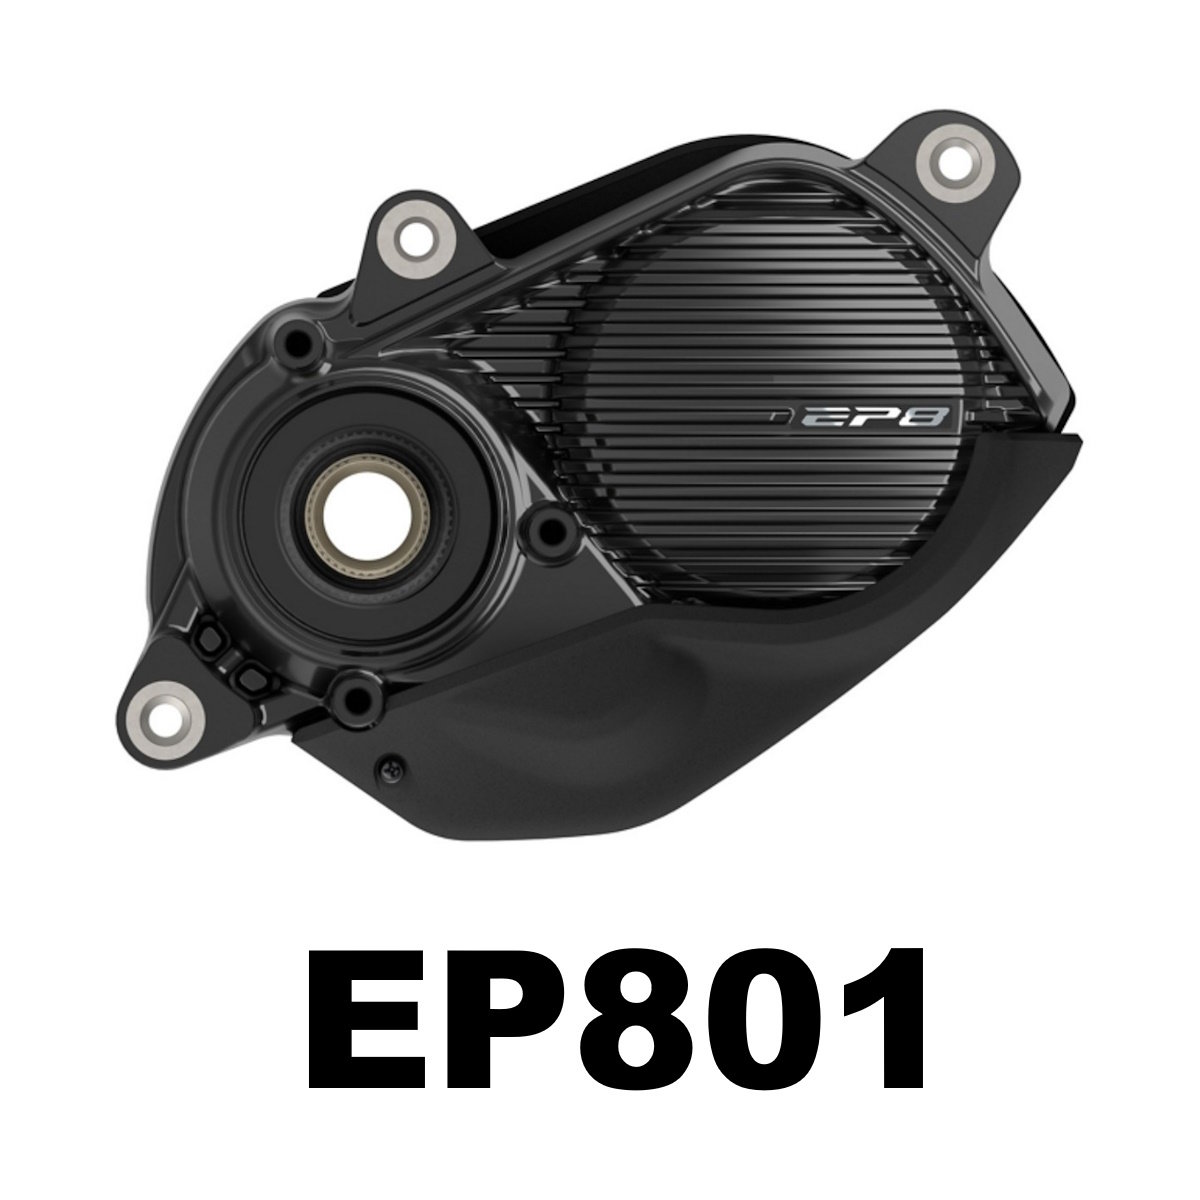 Shimano EP801 E-System